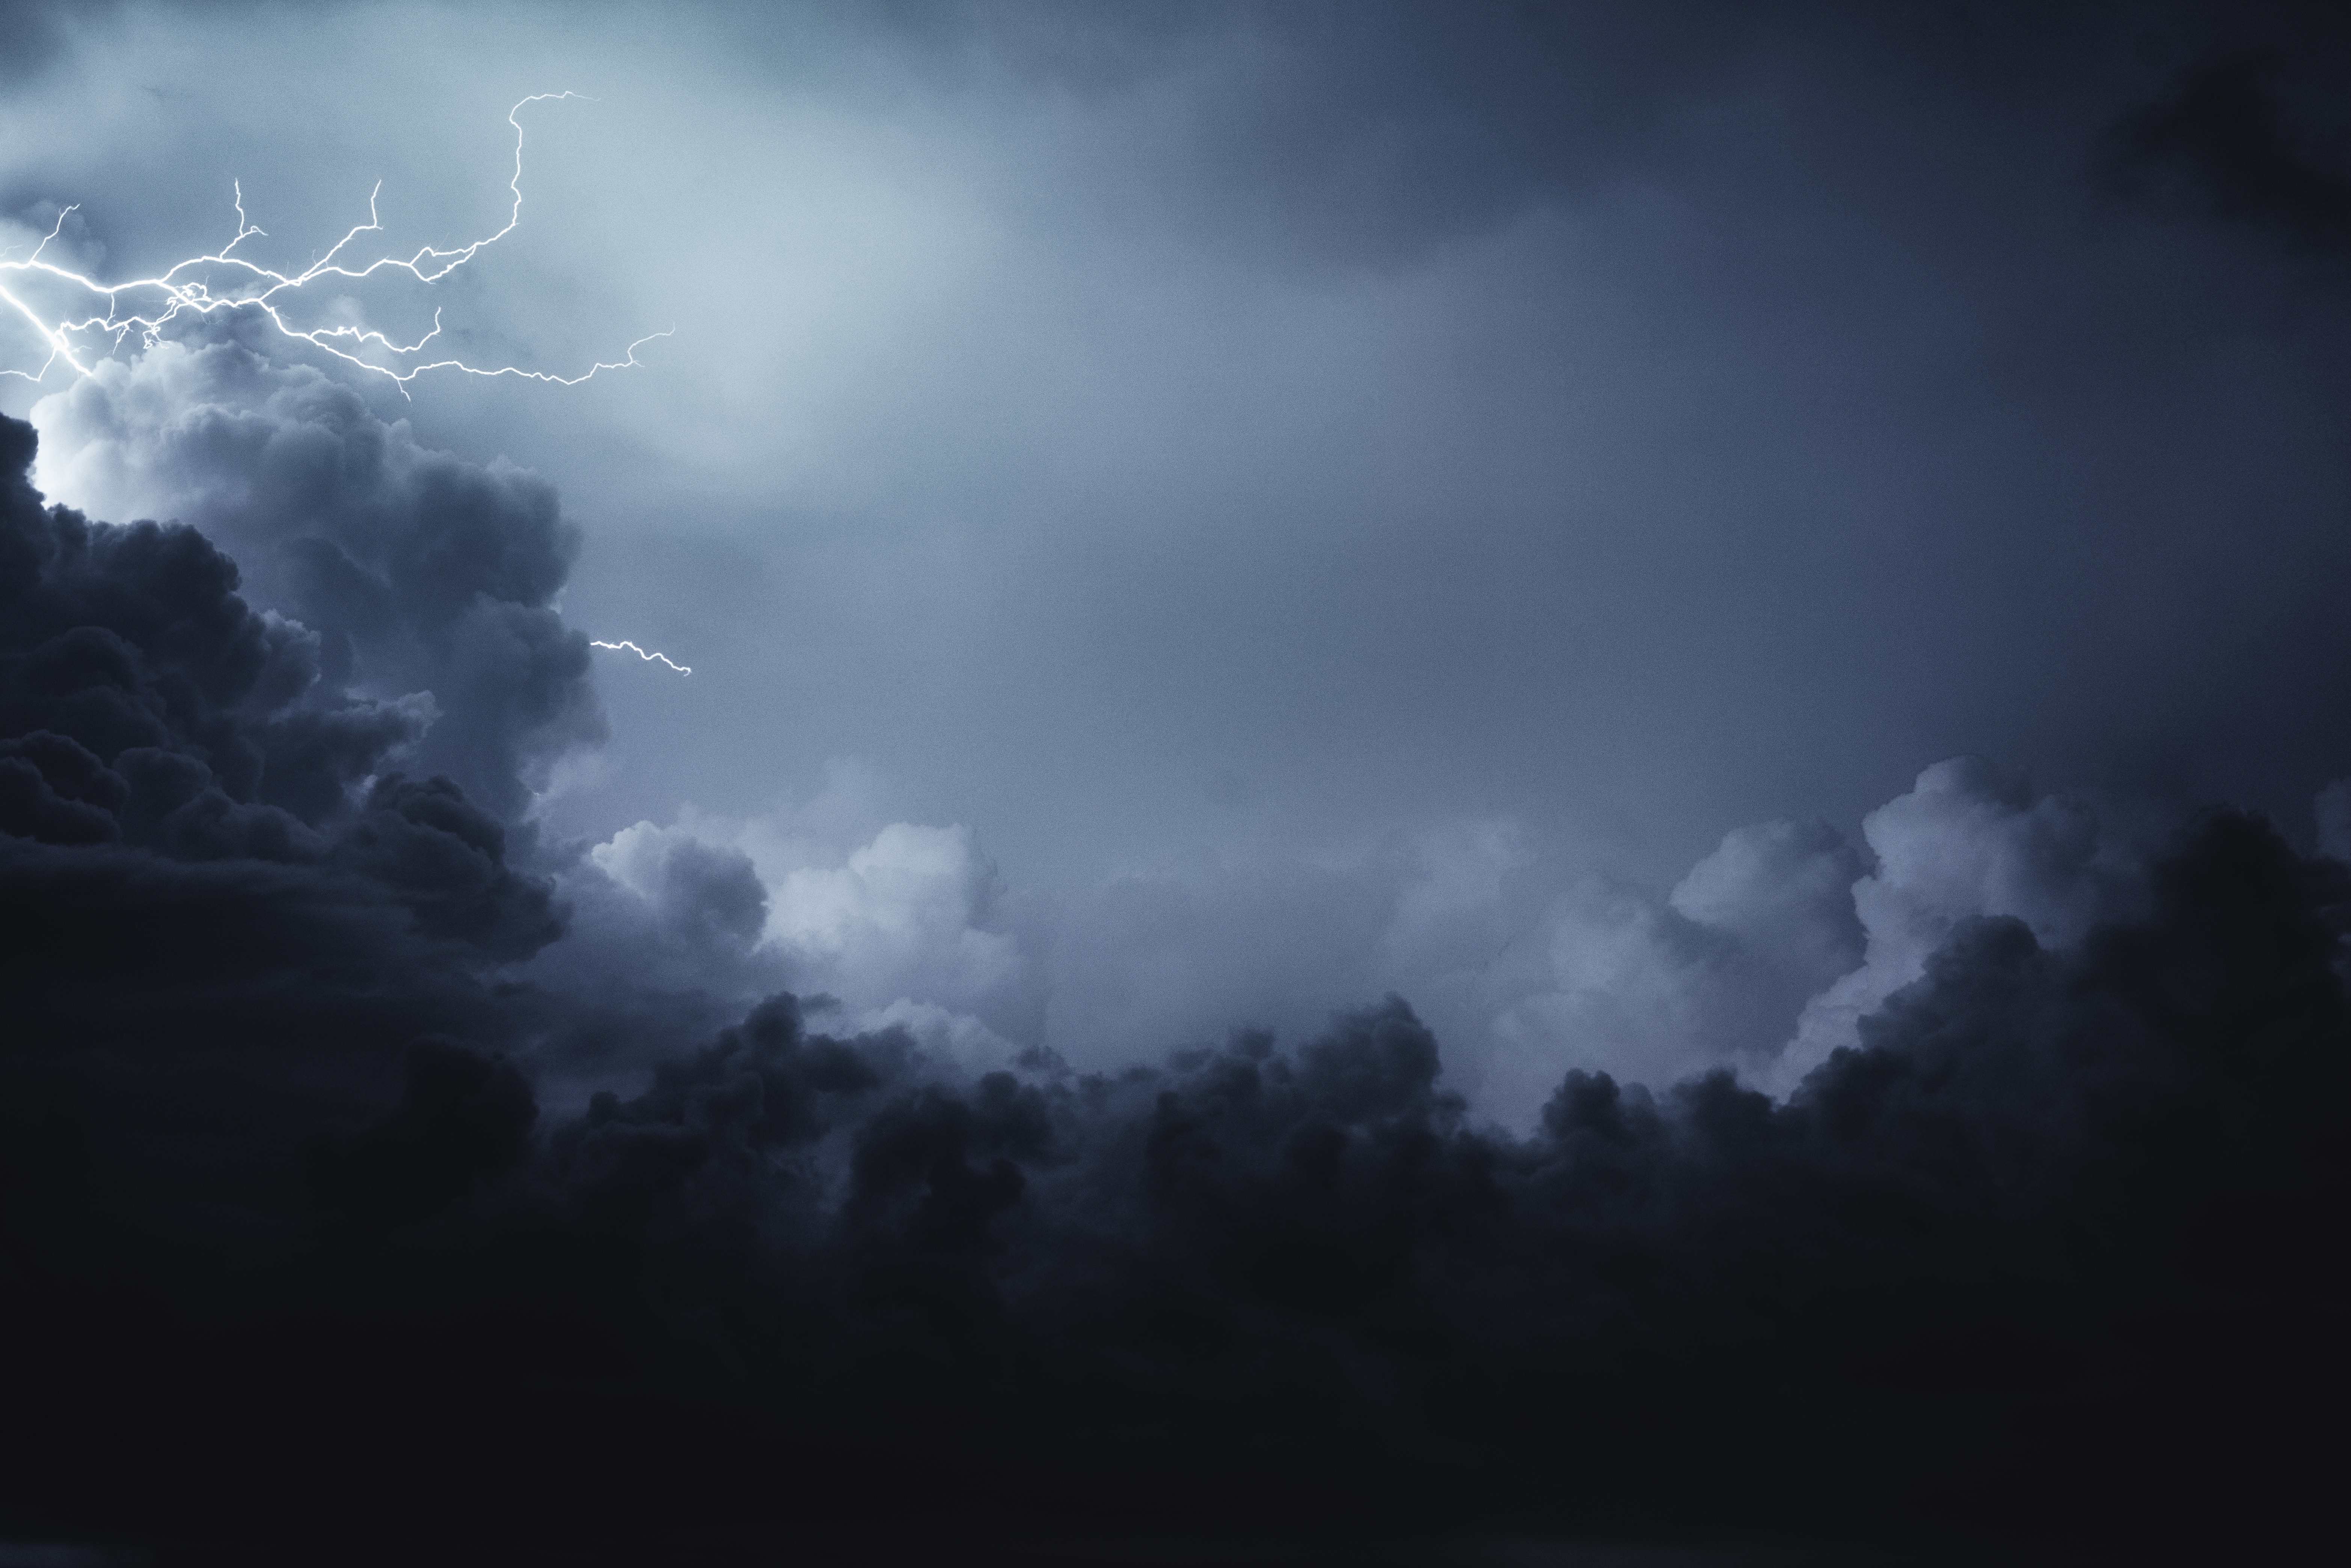 Lightning striking in a thunderstorm